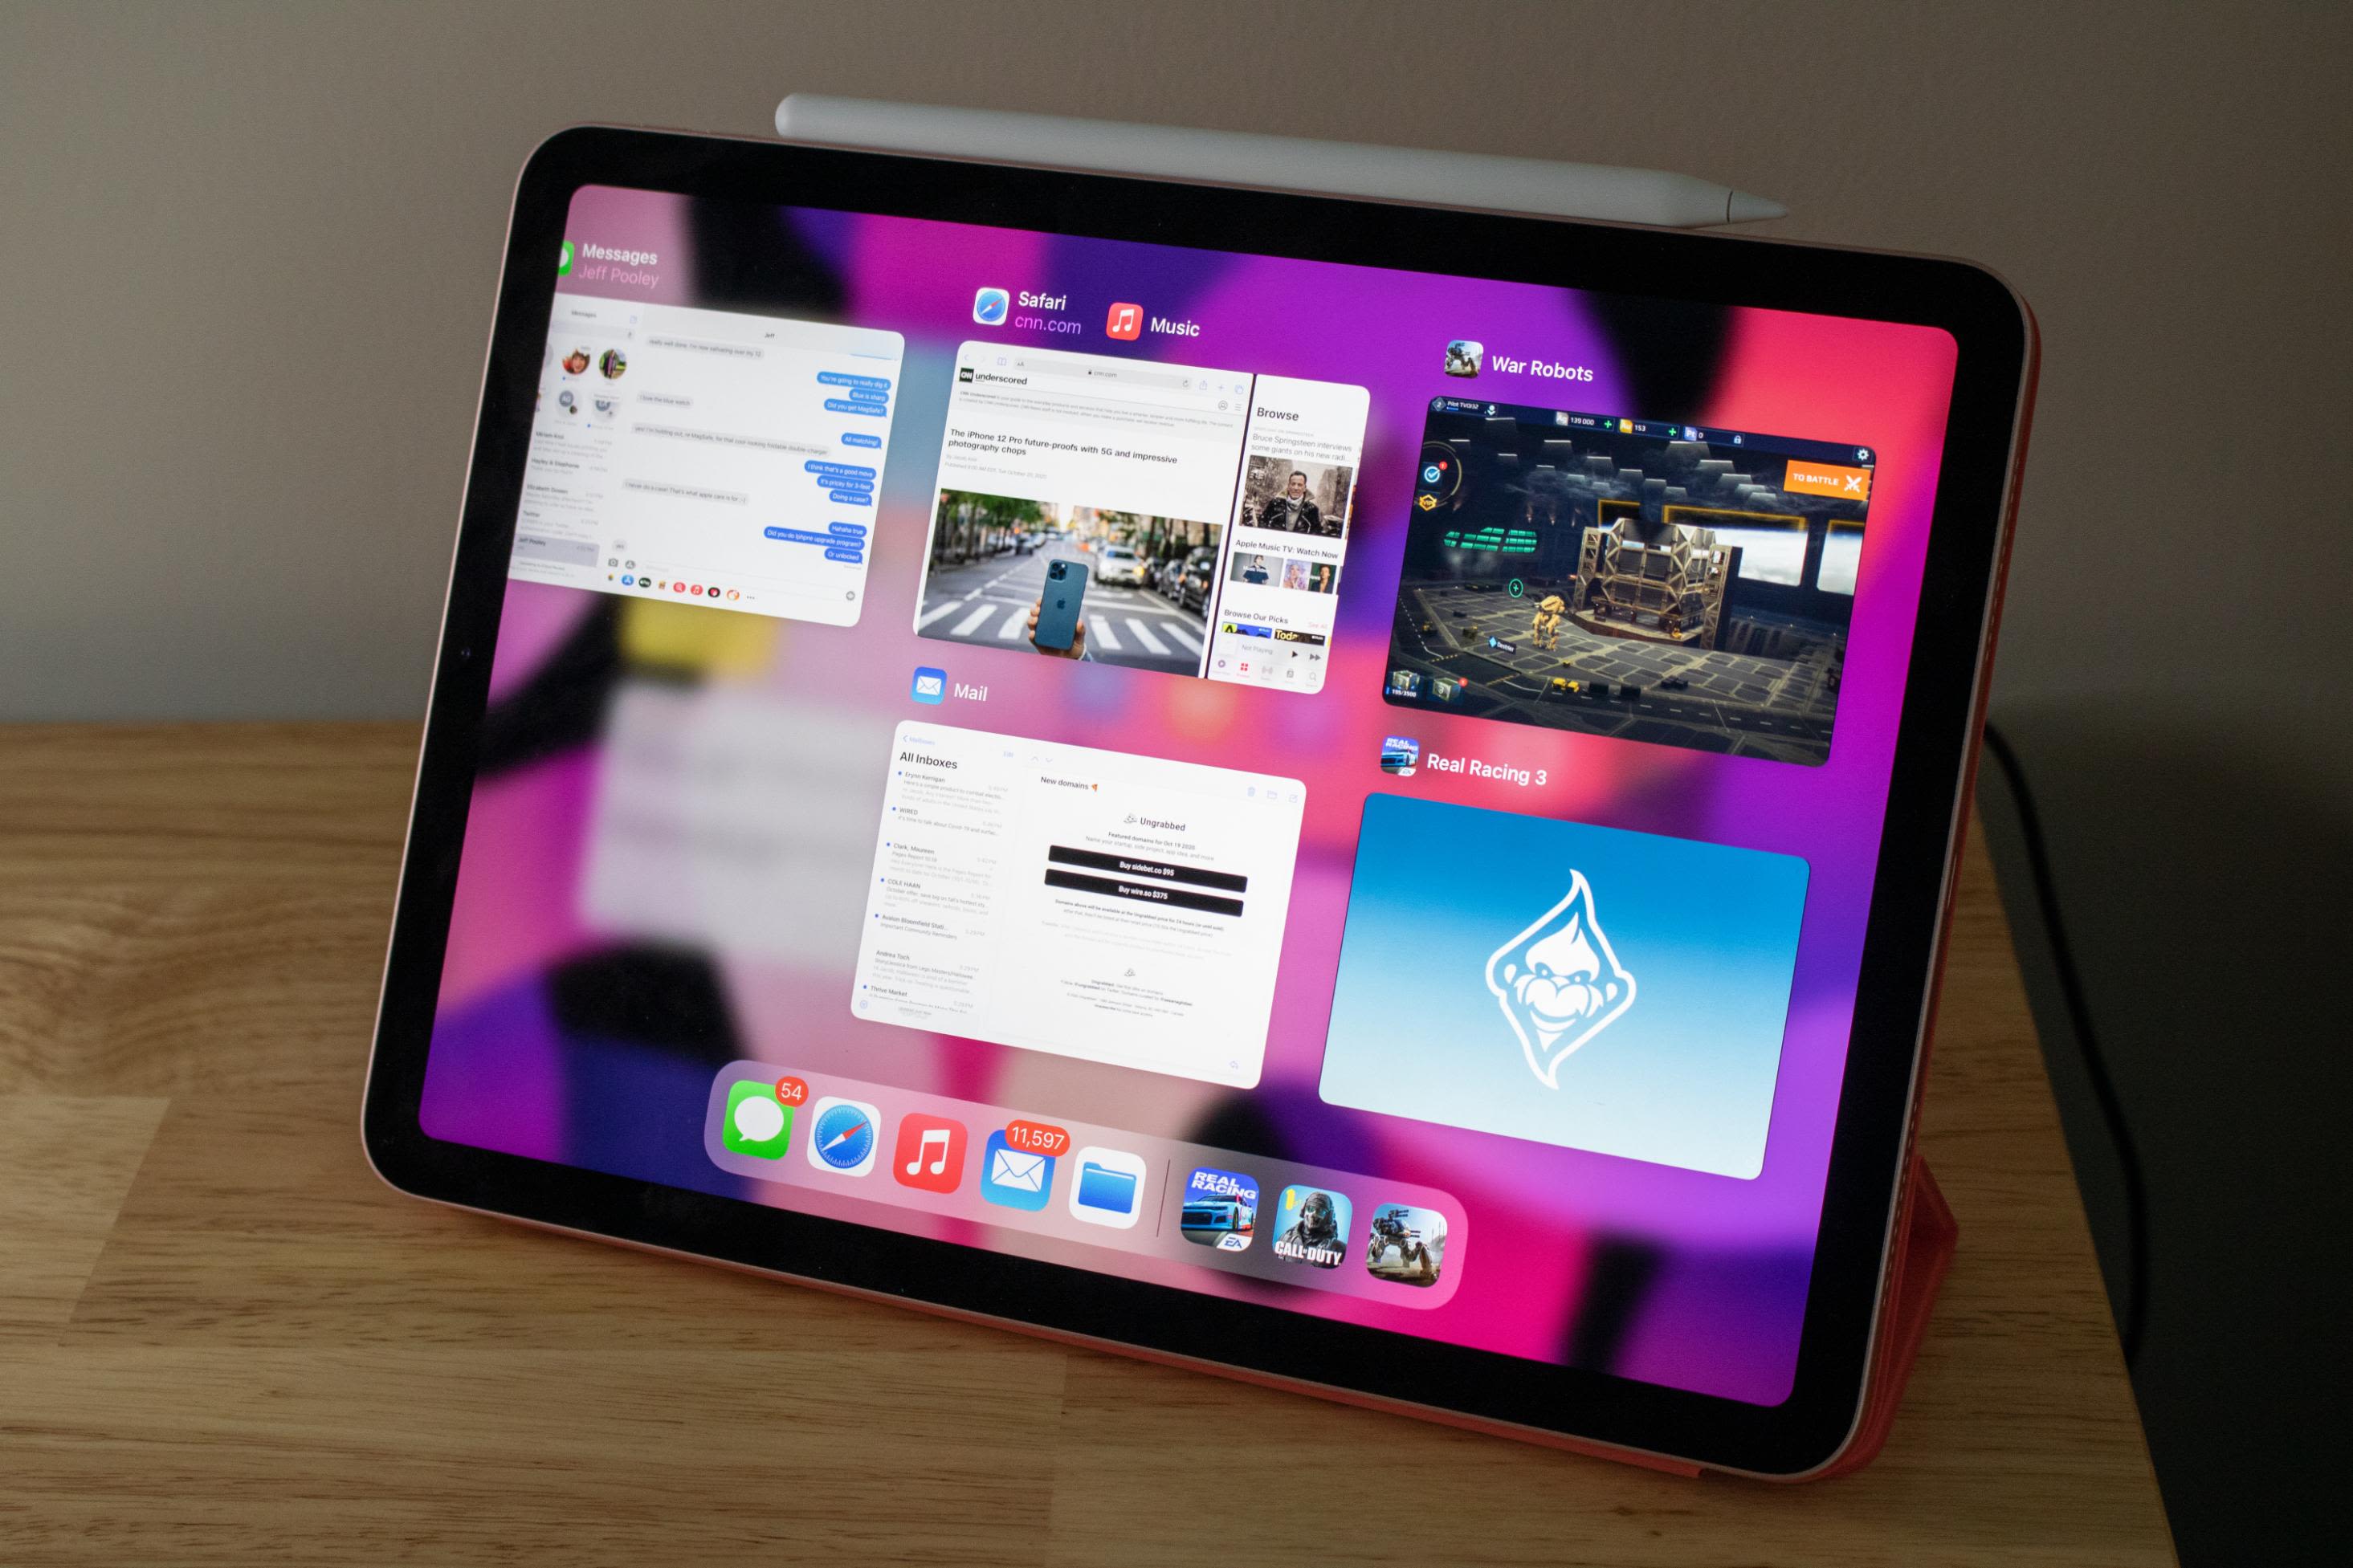 iPad Air 4th Generation review